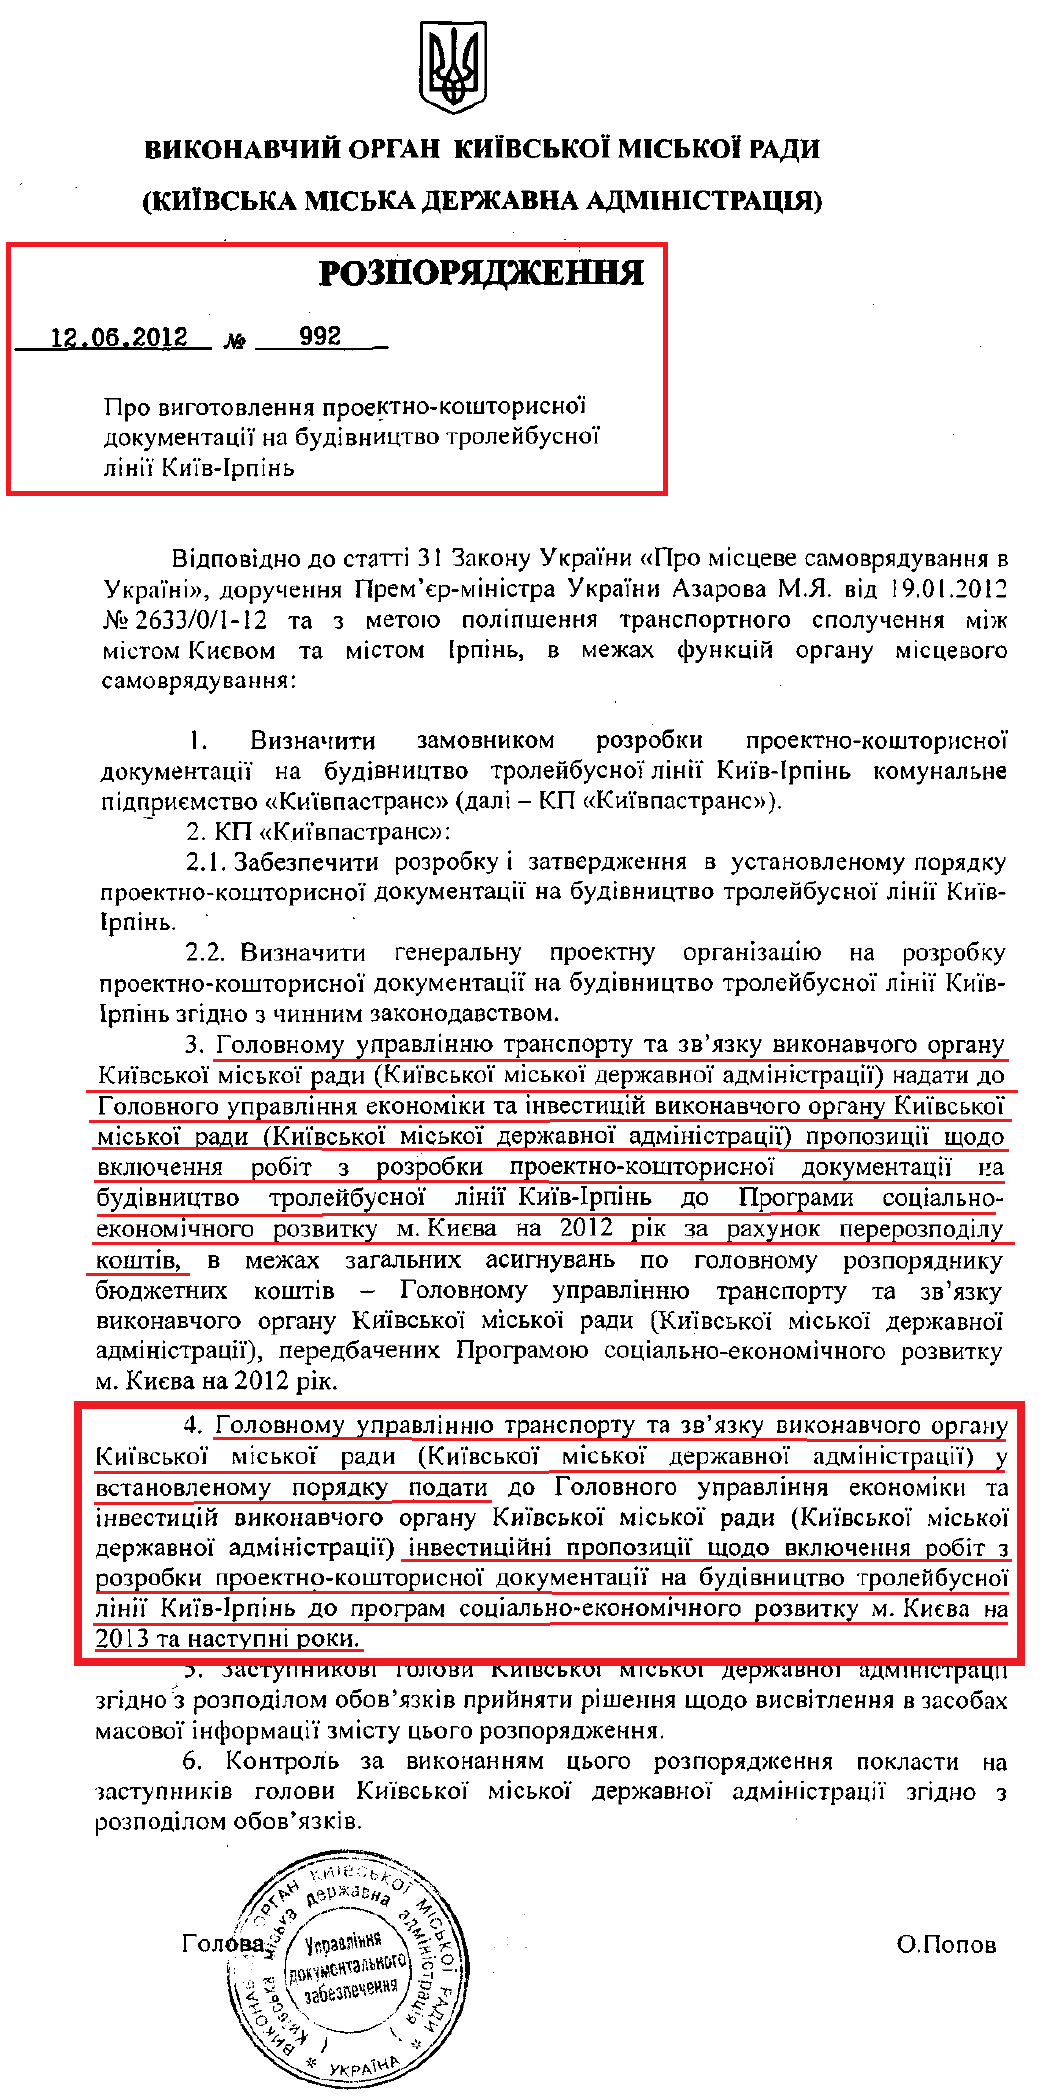 http://kievcity.gov.ua/upload/orders/kmda_992_20120612.pdf